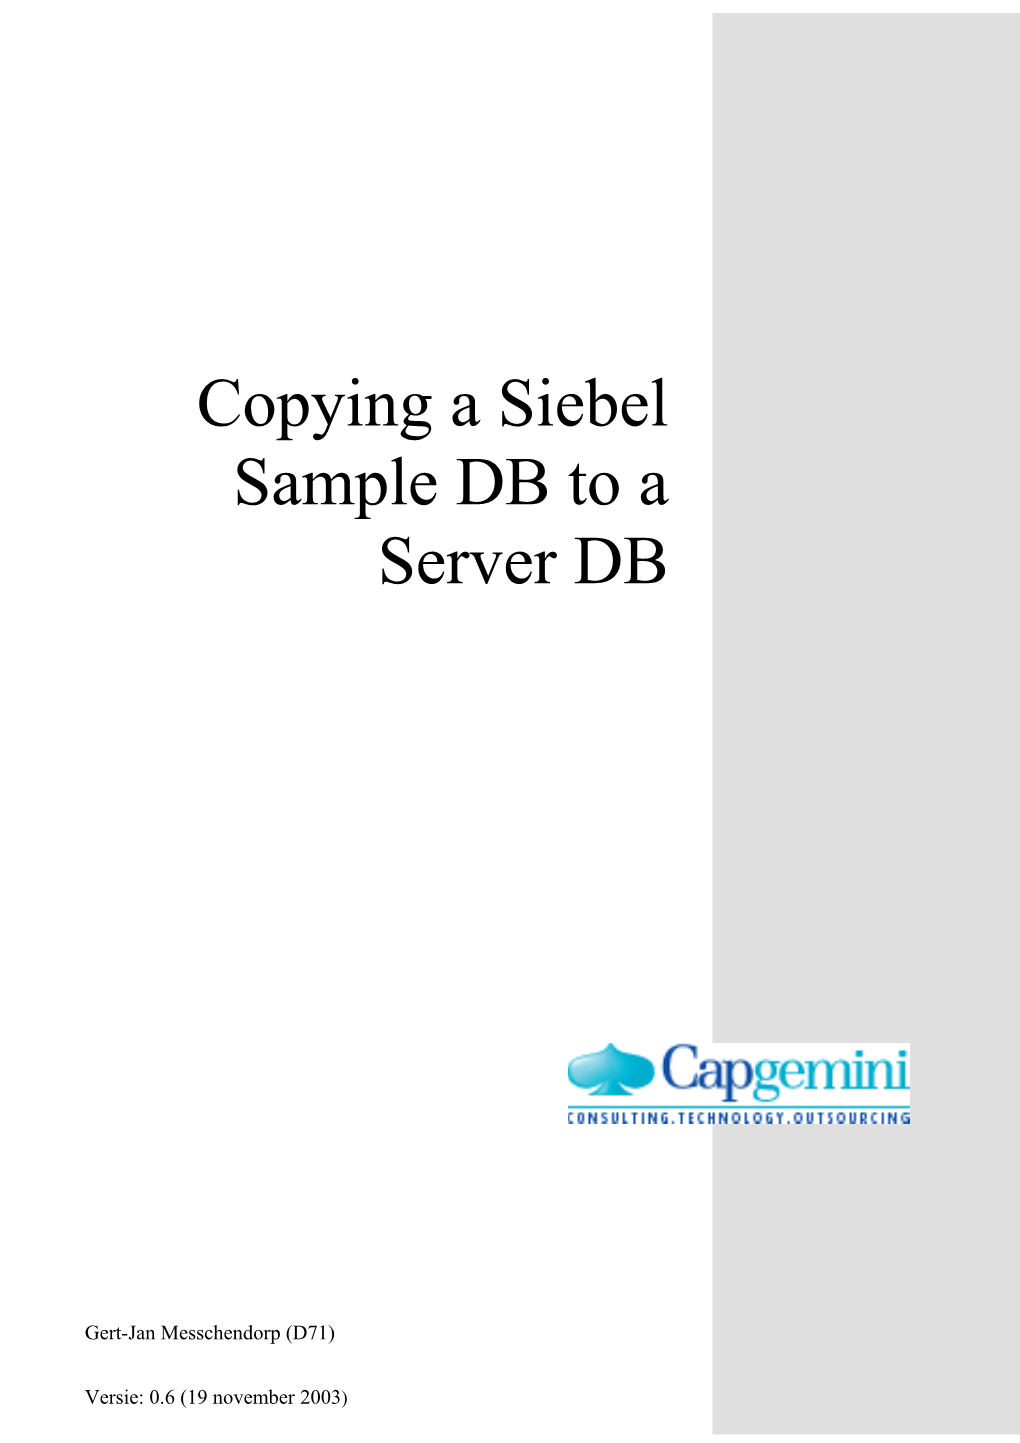 Copying a Sample DB to a Server DB